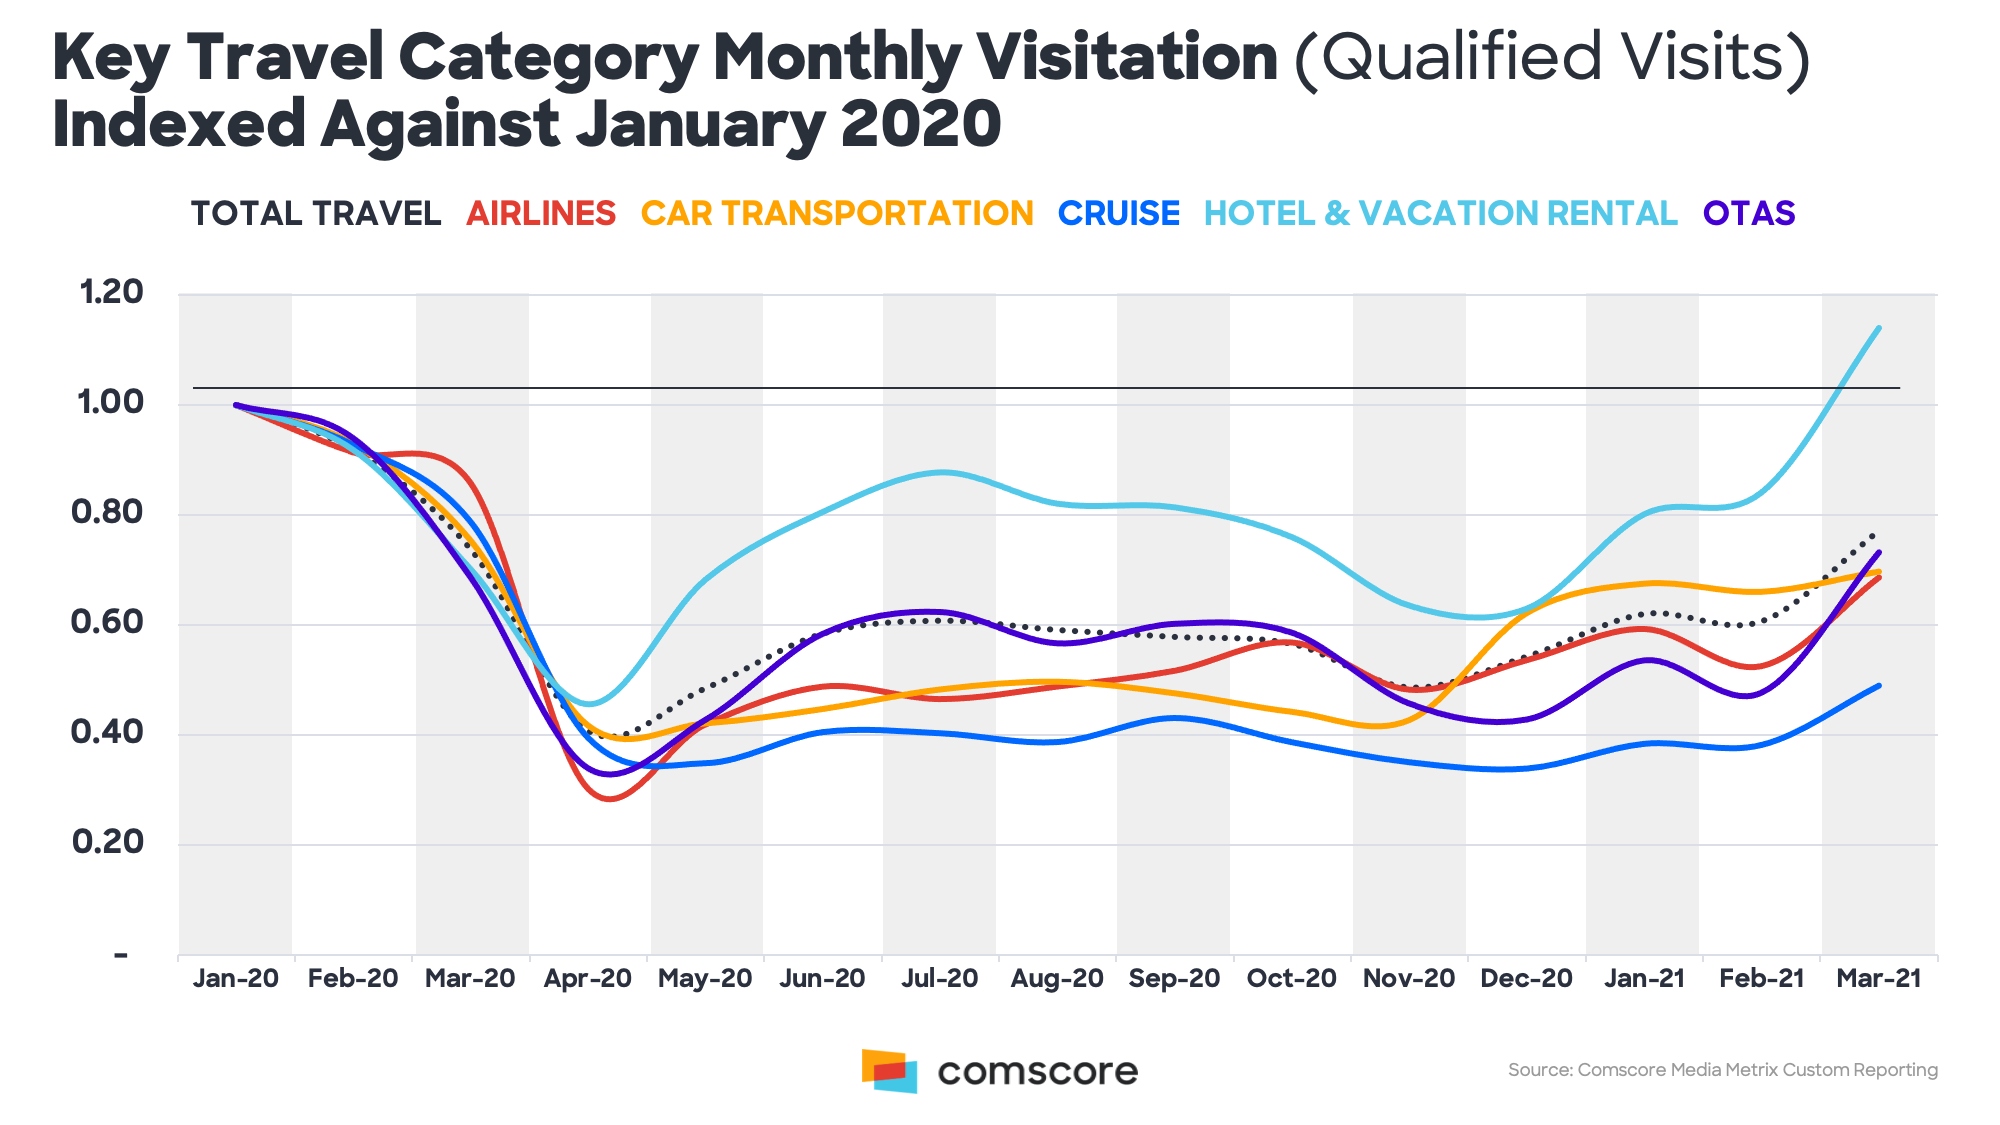 Key Travel Category Monthly Visitation Indexed Against January 2020